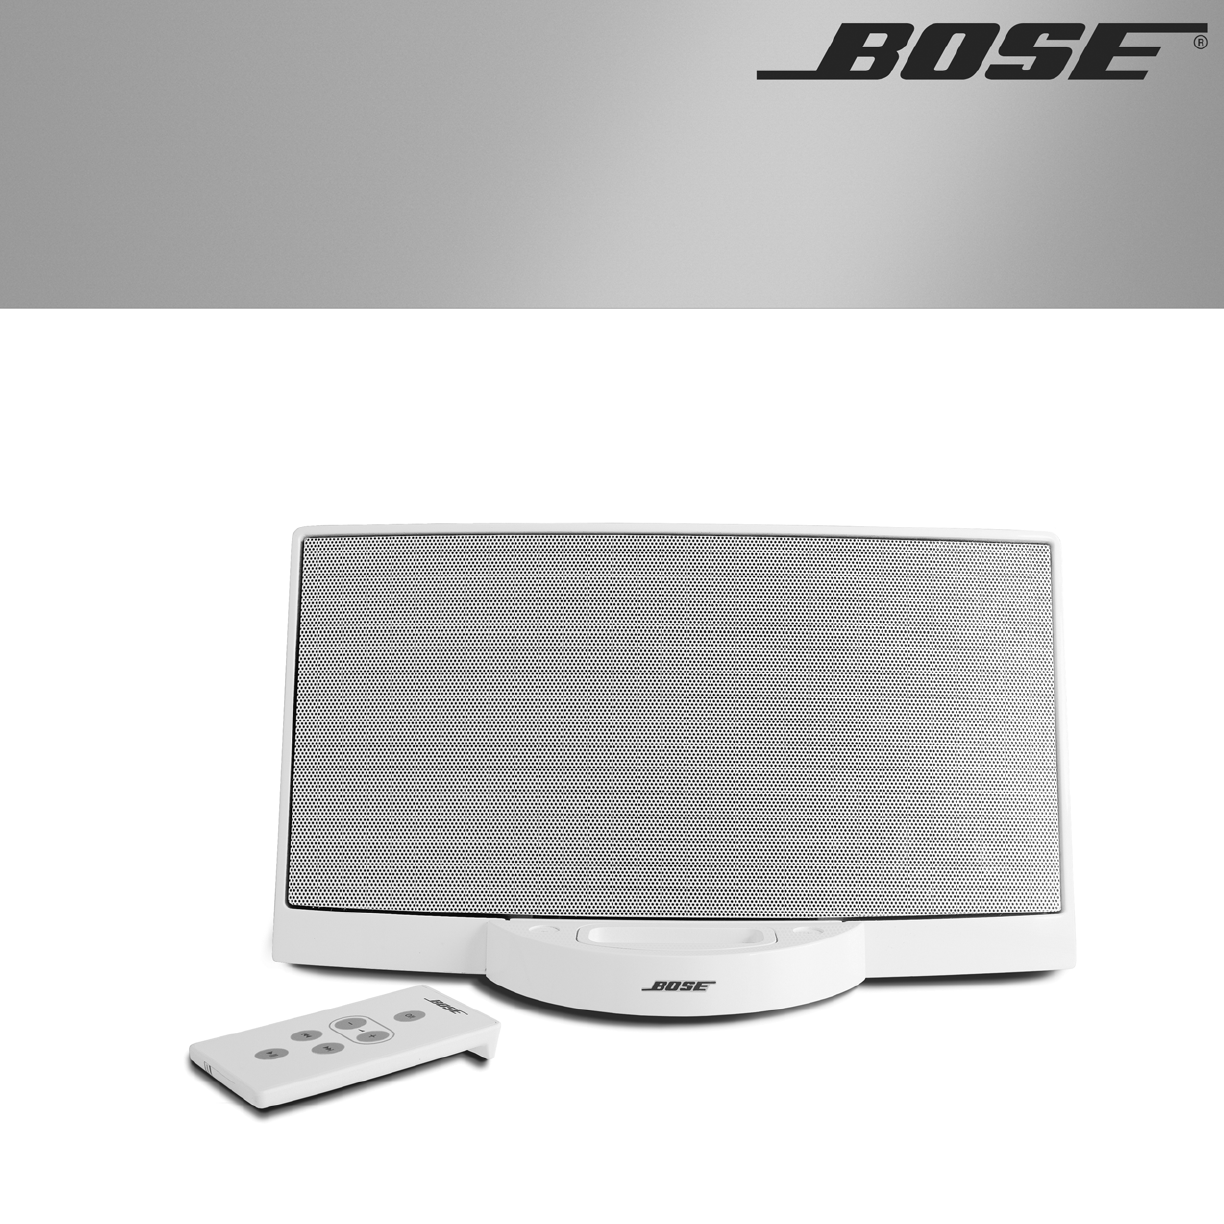 Bose Video Roommate Speaker System Manual